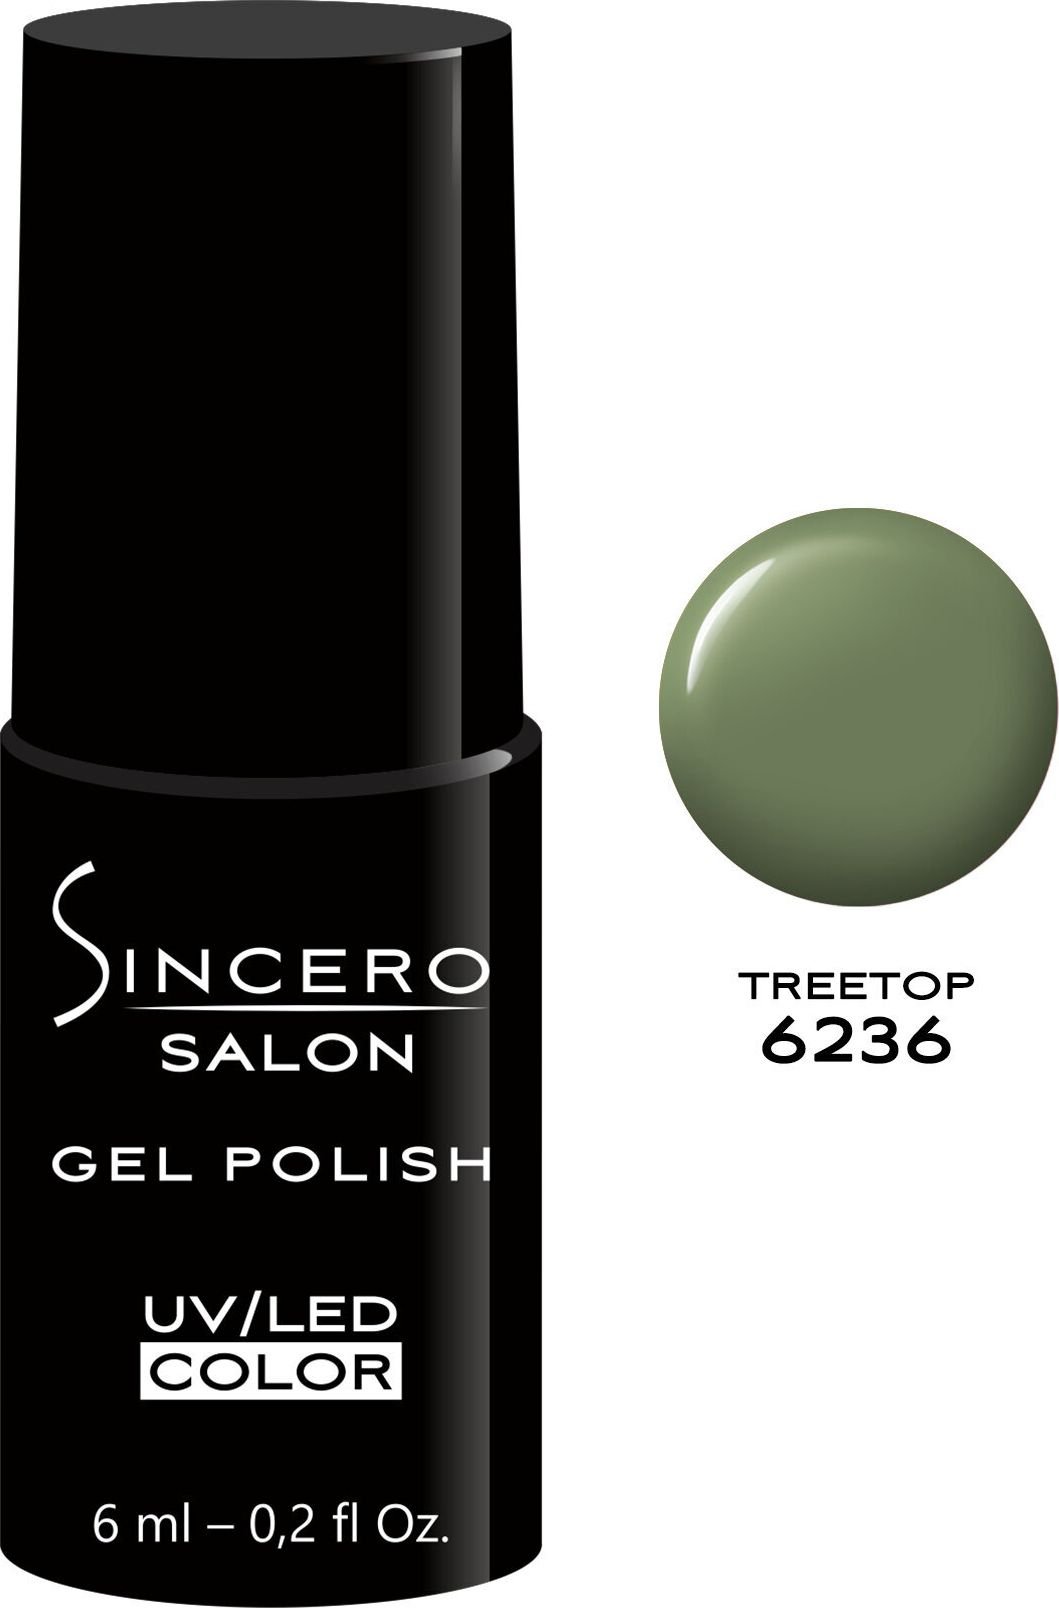 Sincero Salon Gelinis nagų lakas Sincero Salon Treetop 6236, 6 ml